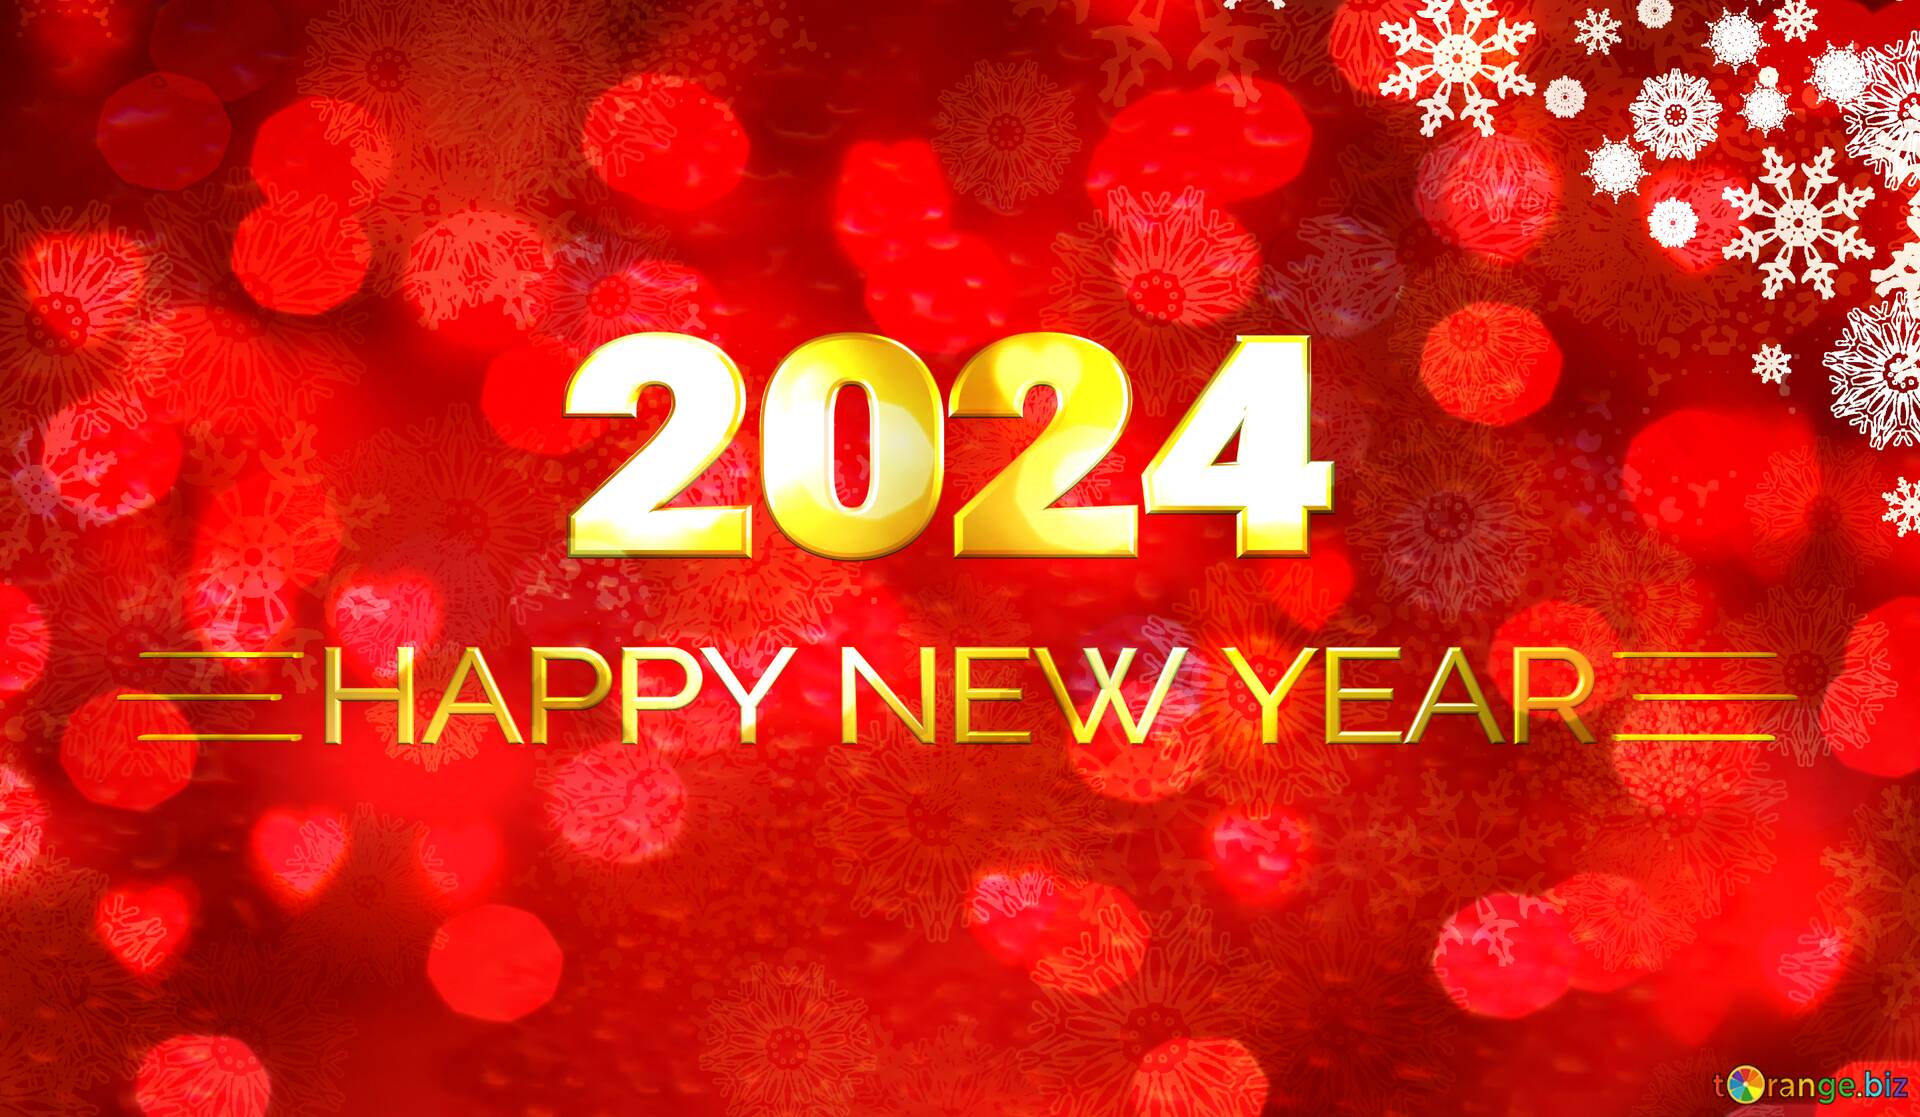 Новый год 2024 год подготовка. New year 2024. Новый год 2024 мюзикл. Новый год 2024 Грузия. Happy New year 2024.